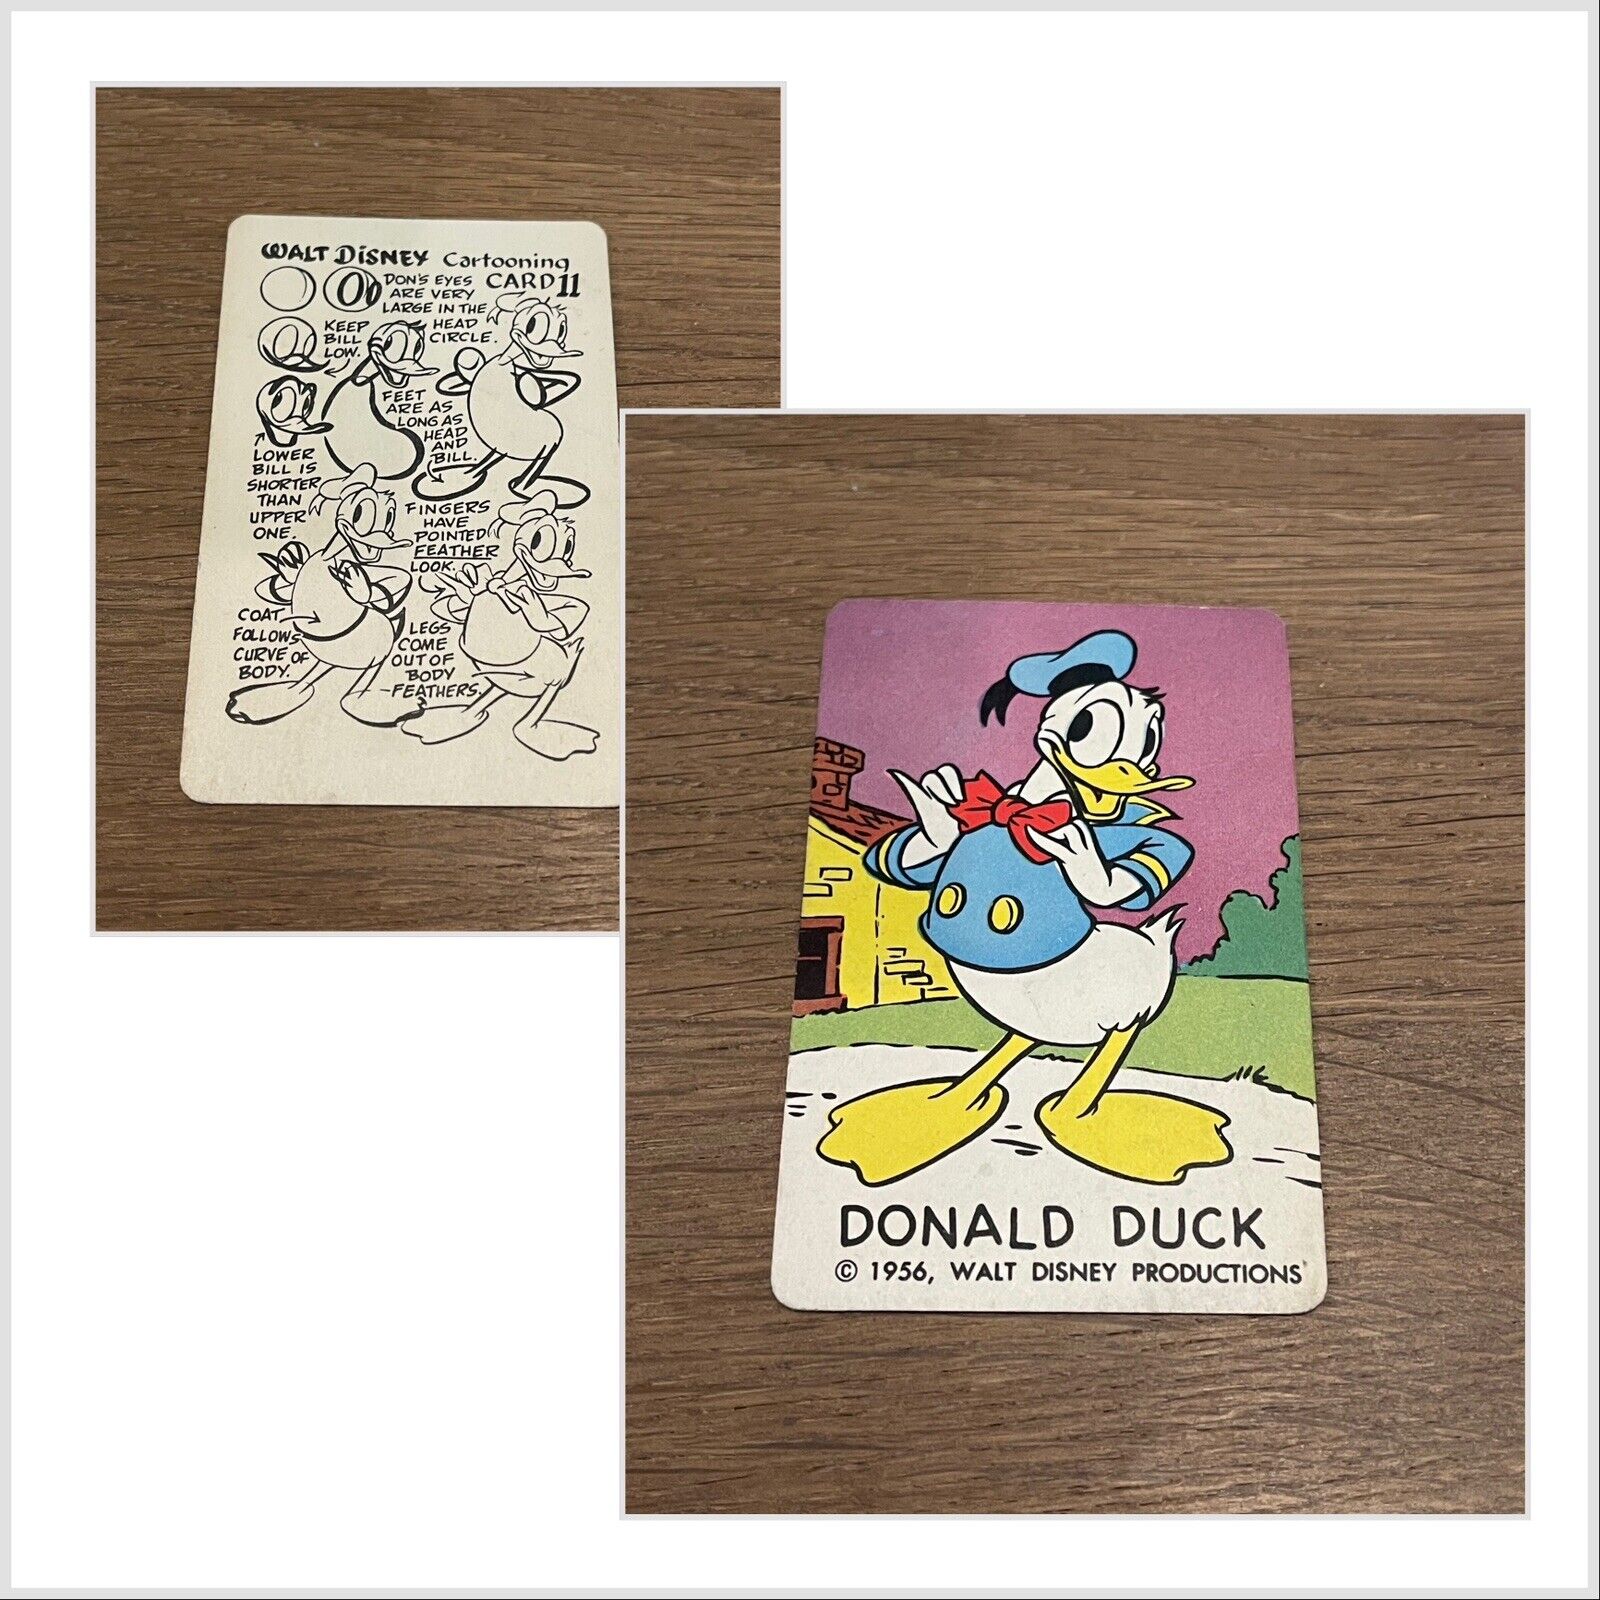 VINTAGE 1956 WALT DISNEY DONALD DUCK CARTOONING CARD EXTREMELY RARE DISNEY CARD